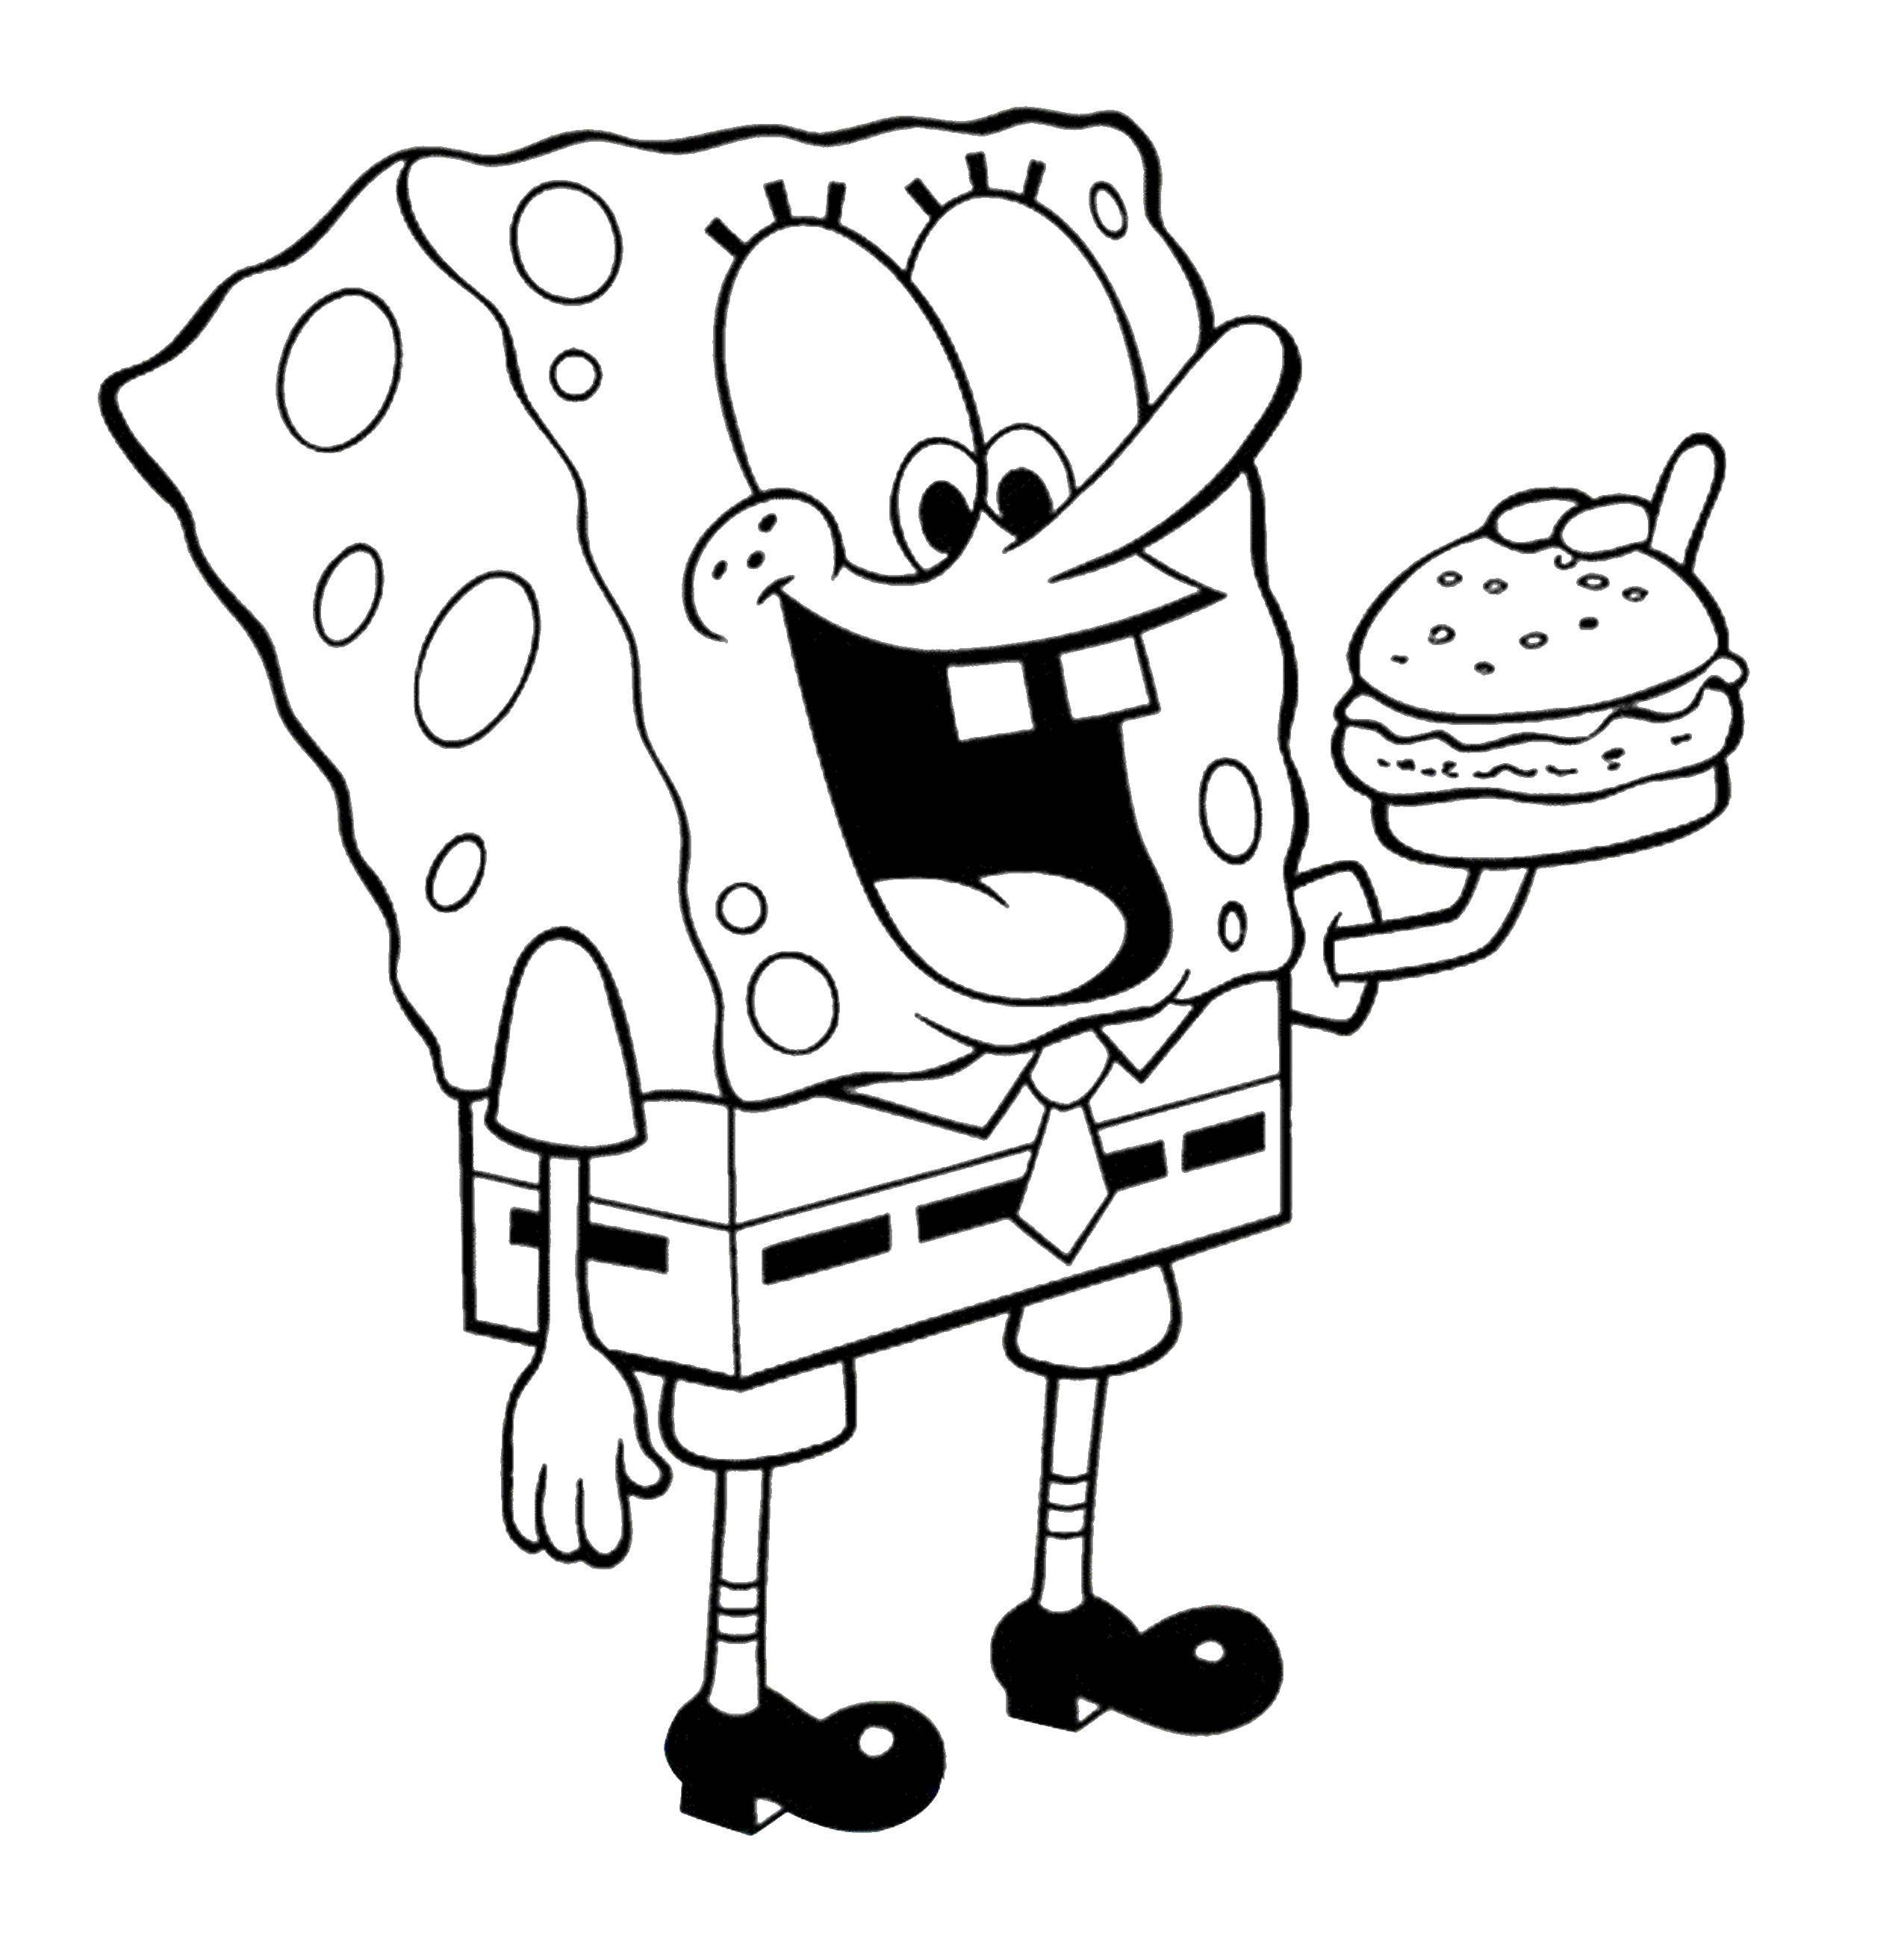 Coloring Spongebob eating hamburger. Category Spongebob. Tags:  cartoon, spongebob, Burger.